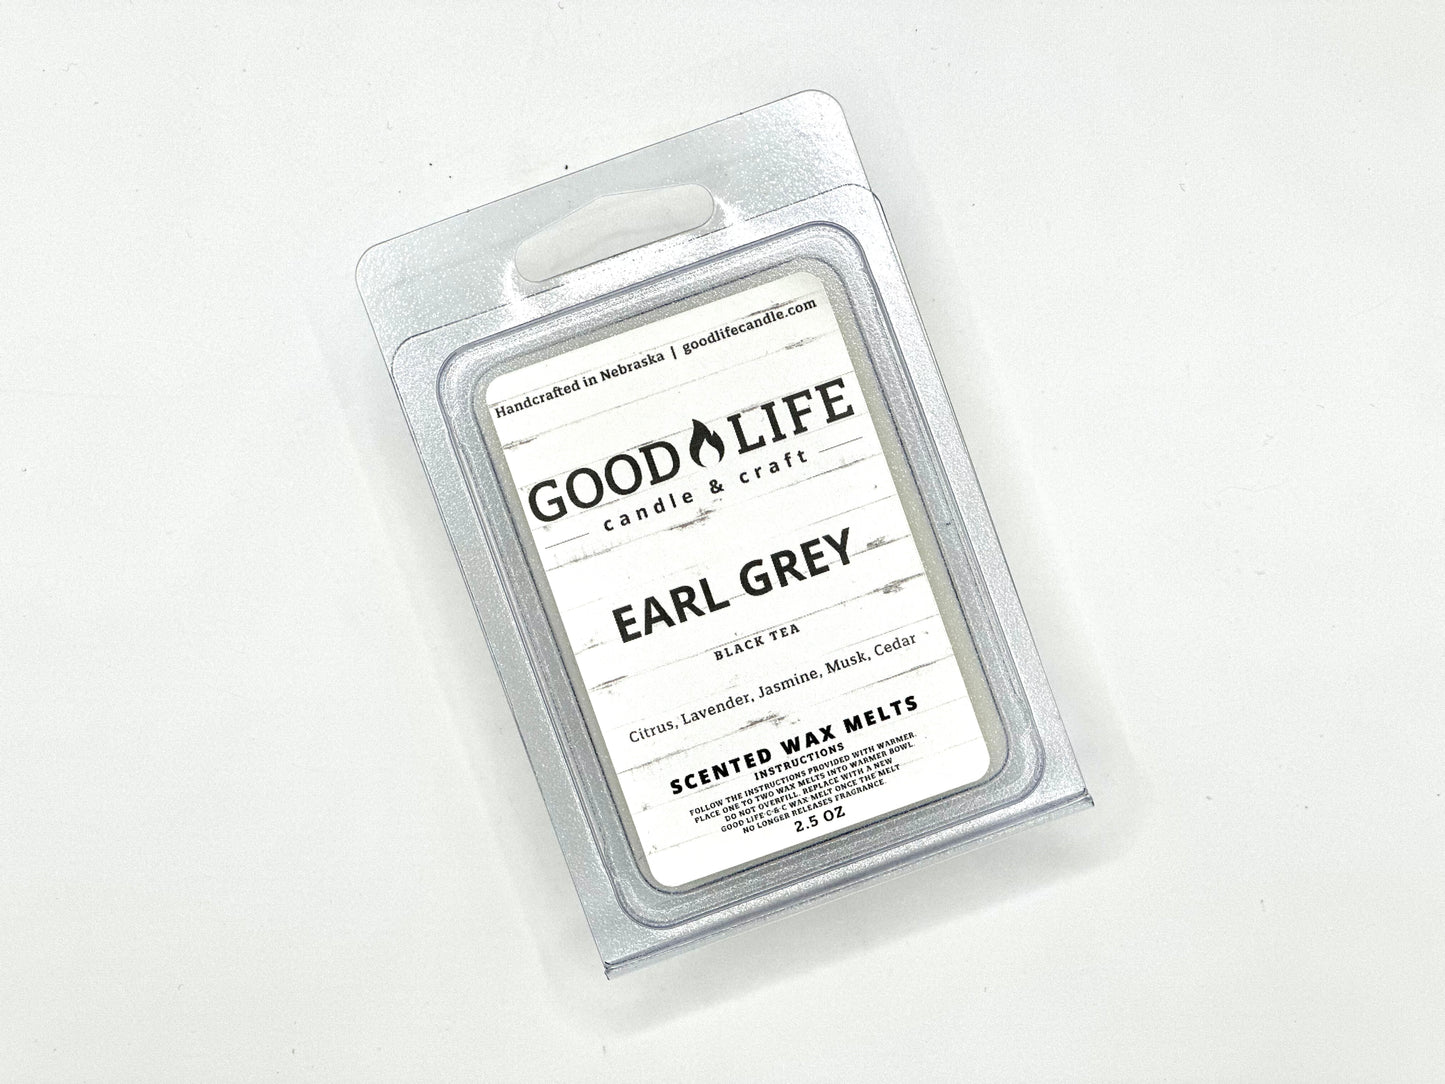 Earl Grey Black Tea Scented Wax Melts